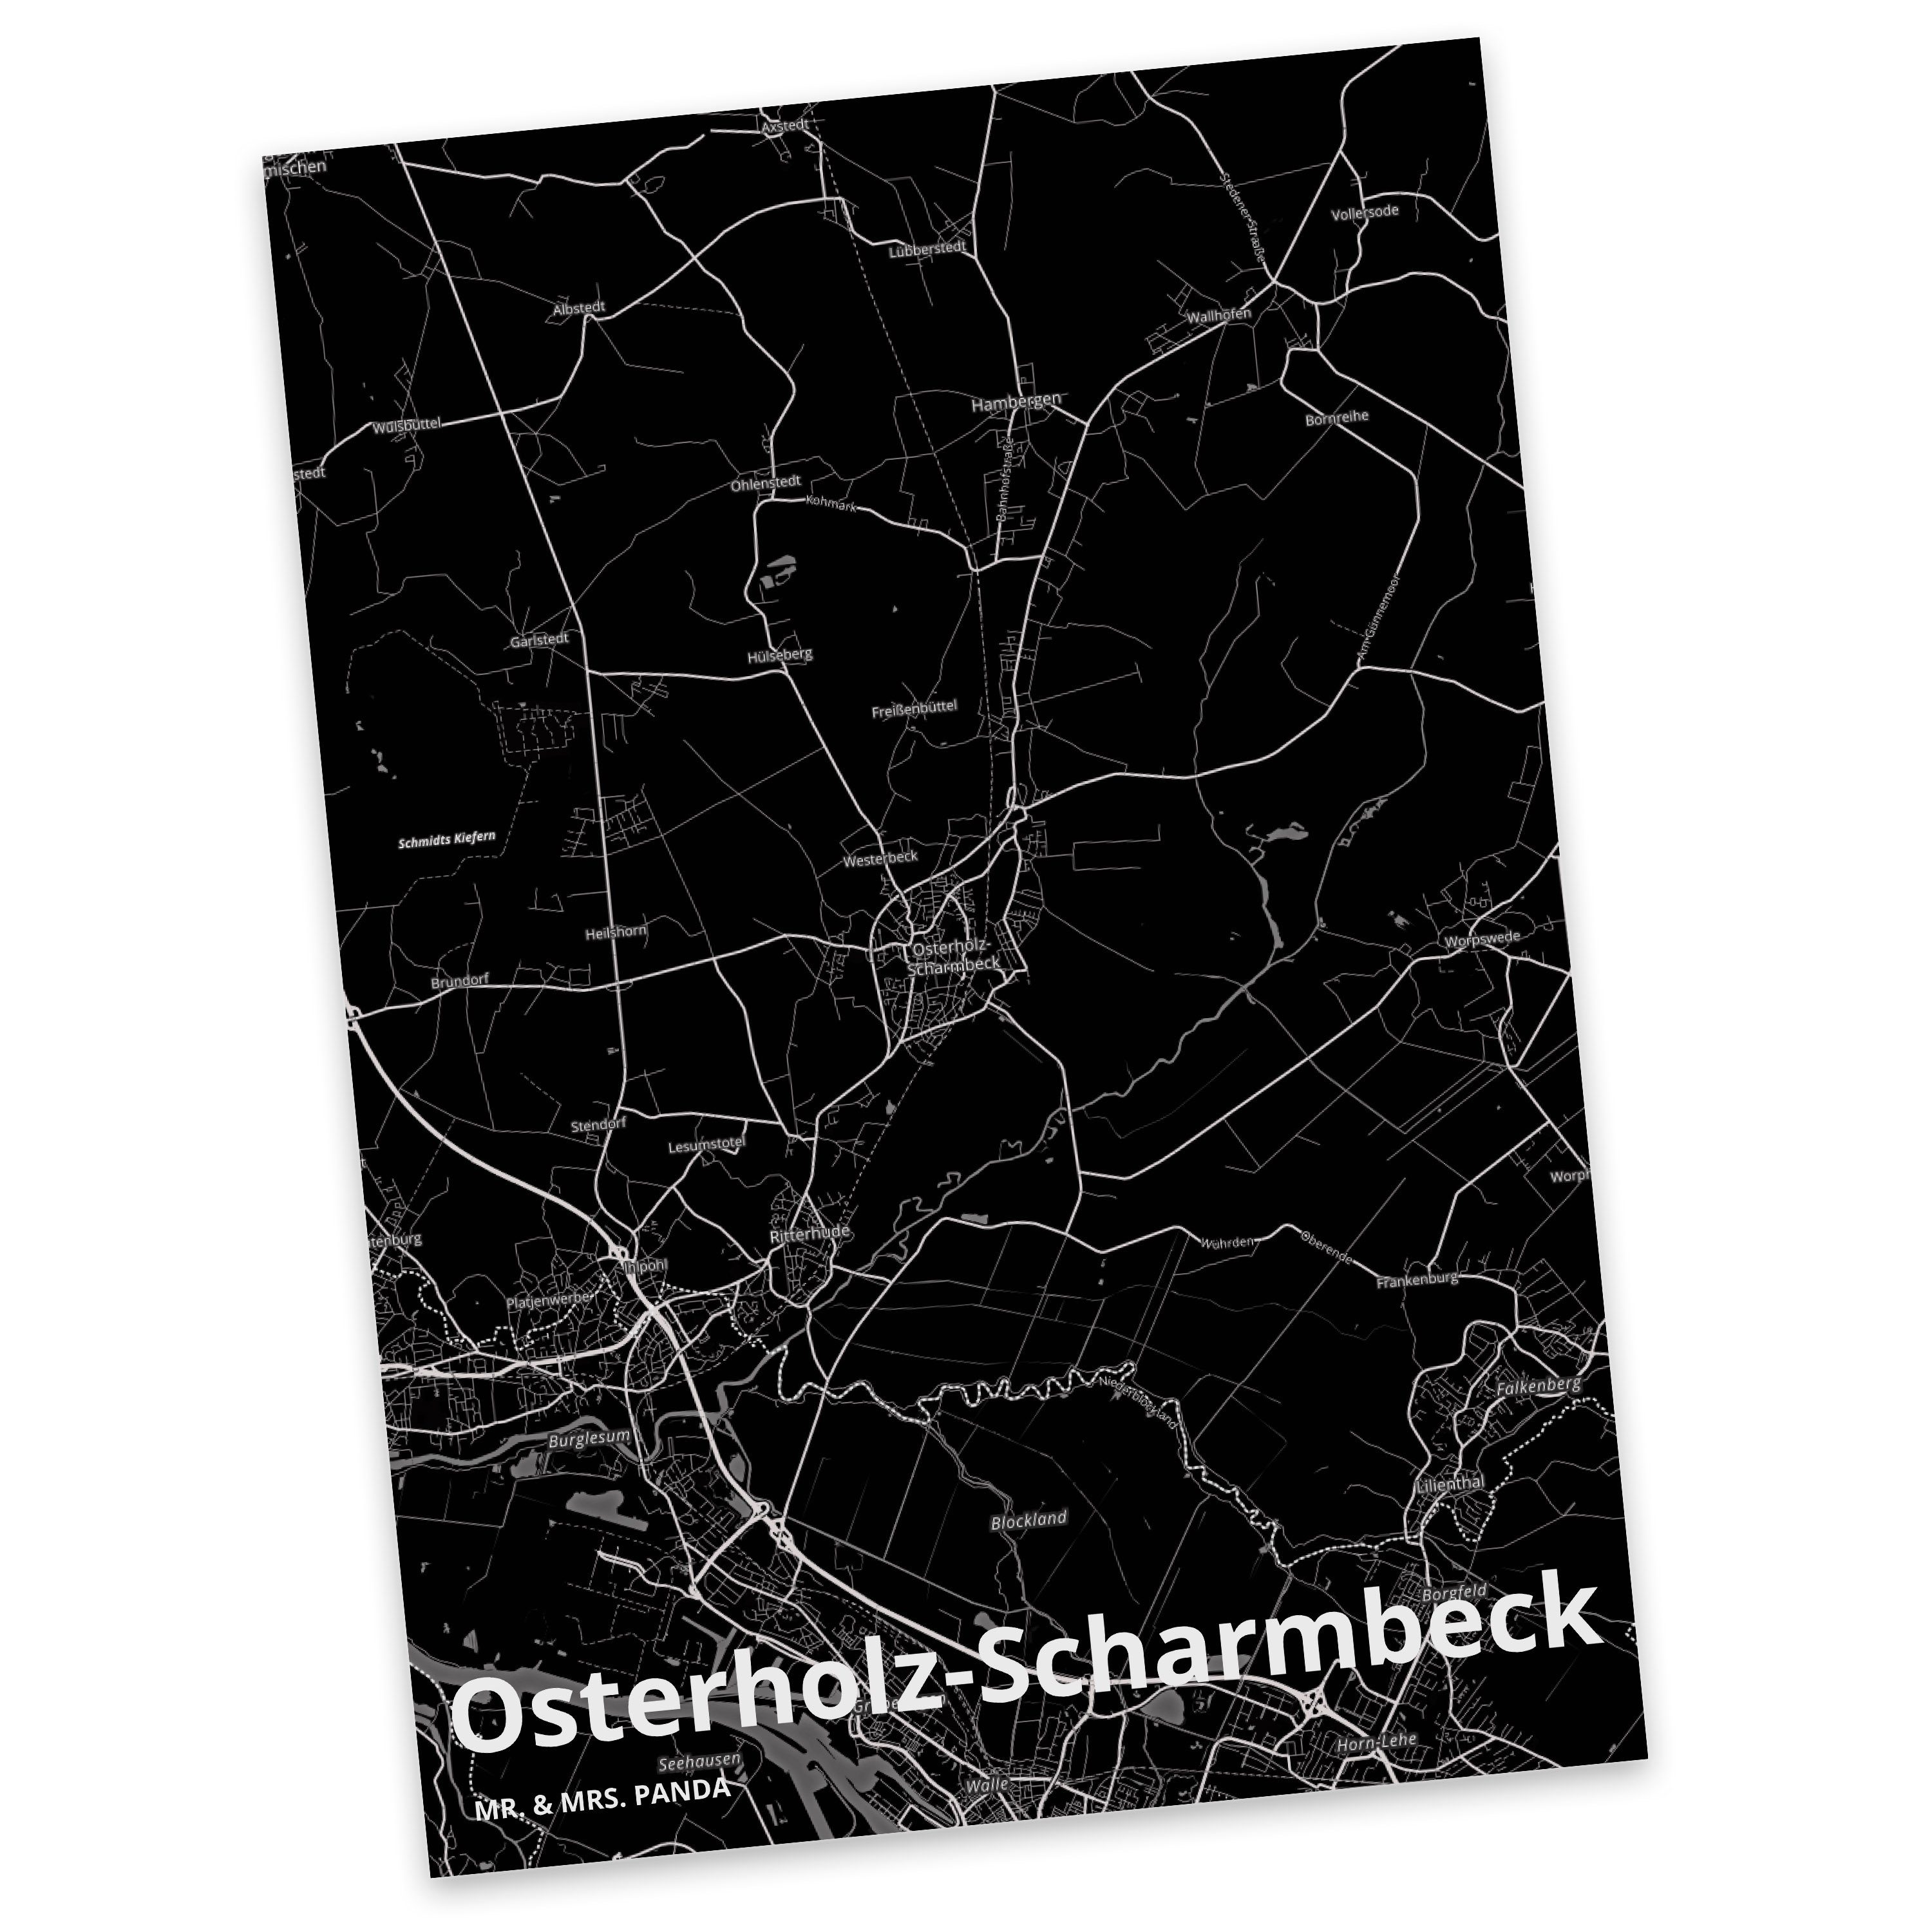 Mr. & Mrs. Panda Postkarte Osterholz-Scharmbeck - Geschenk, Städte, Stadt Dorf Karte Landkarte M